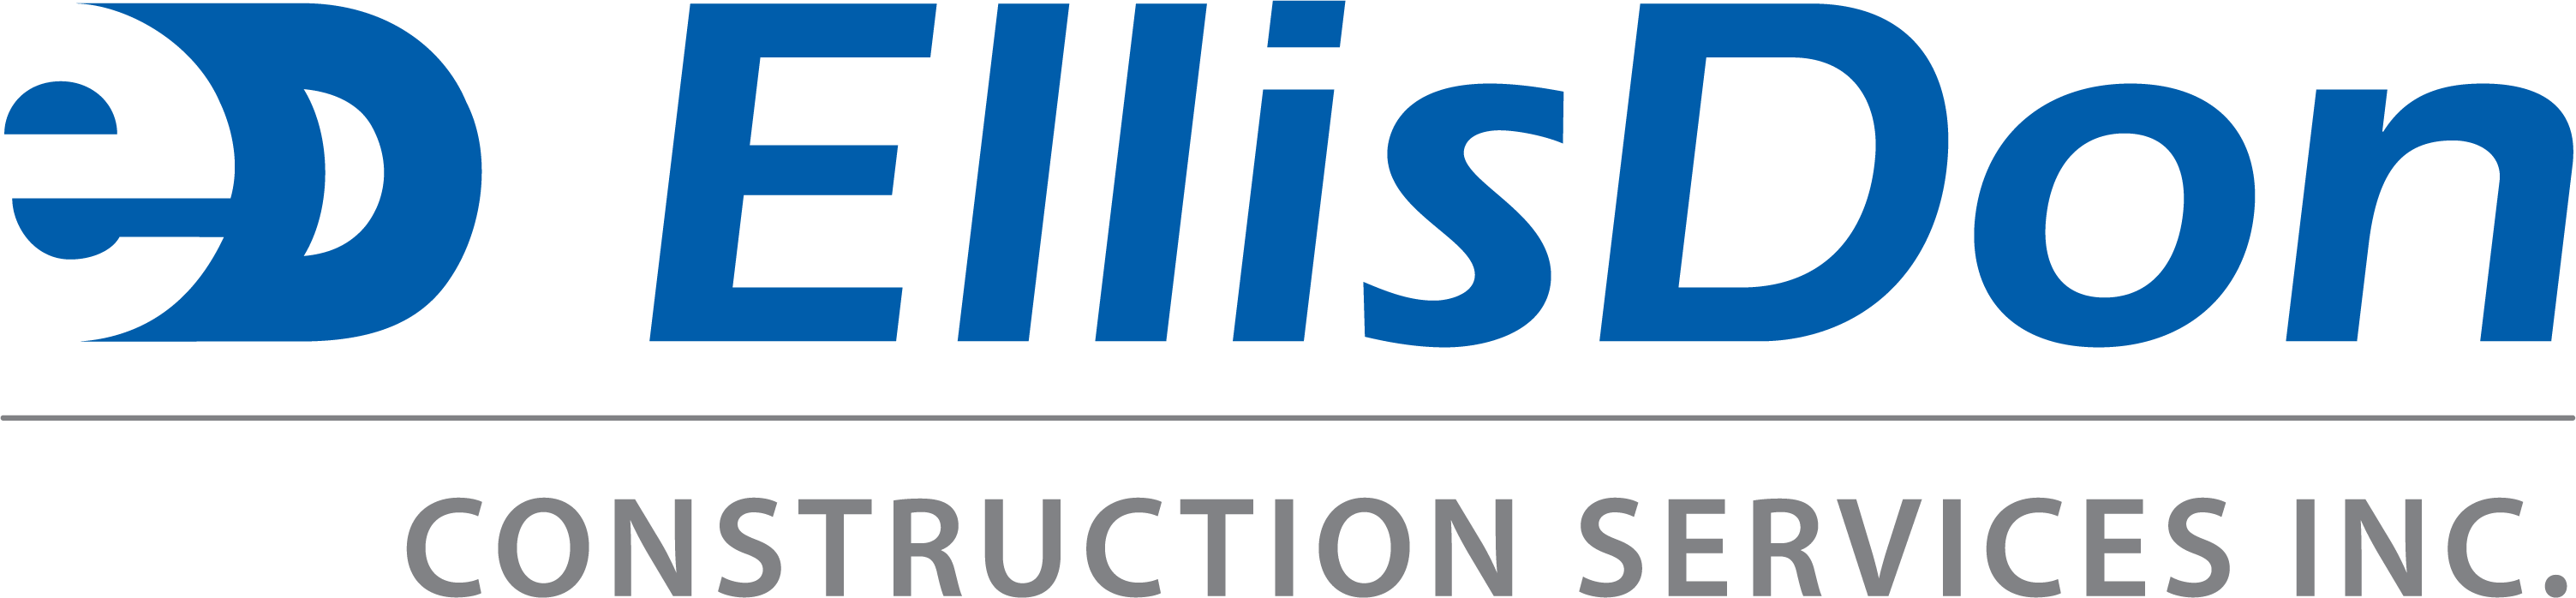 ED Construction Services Inc logo blue 1